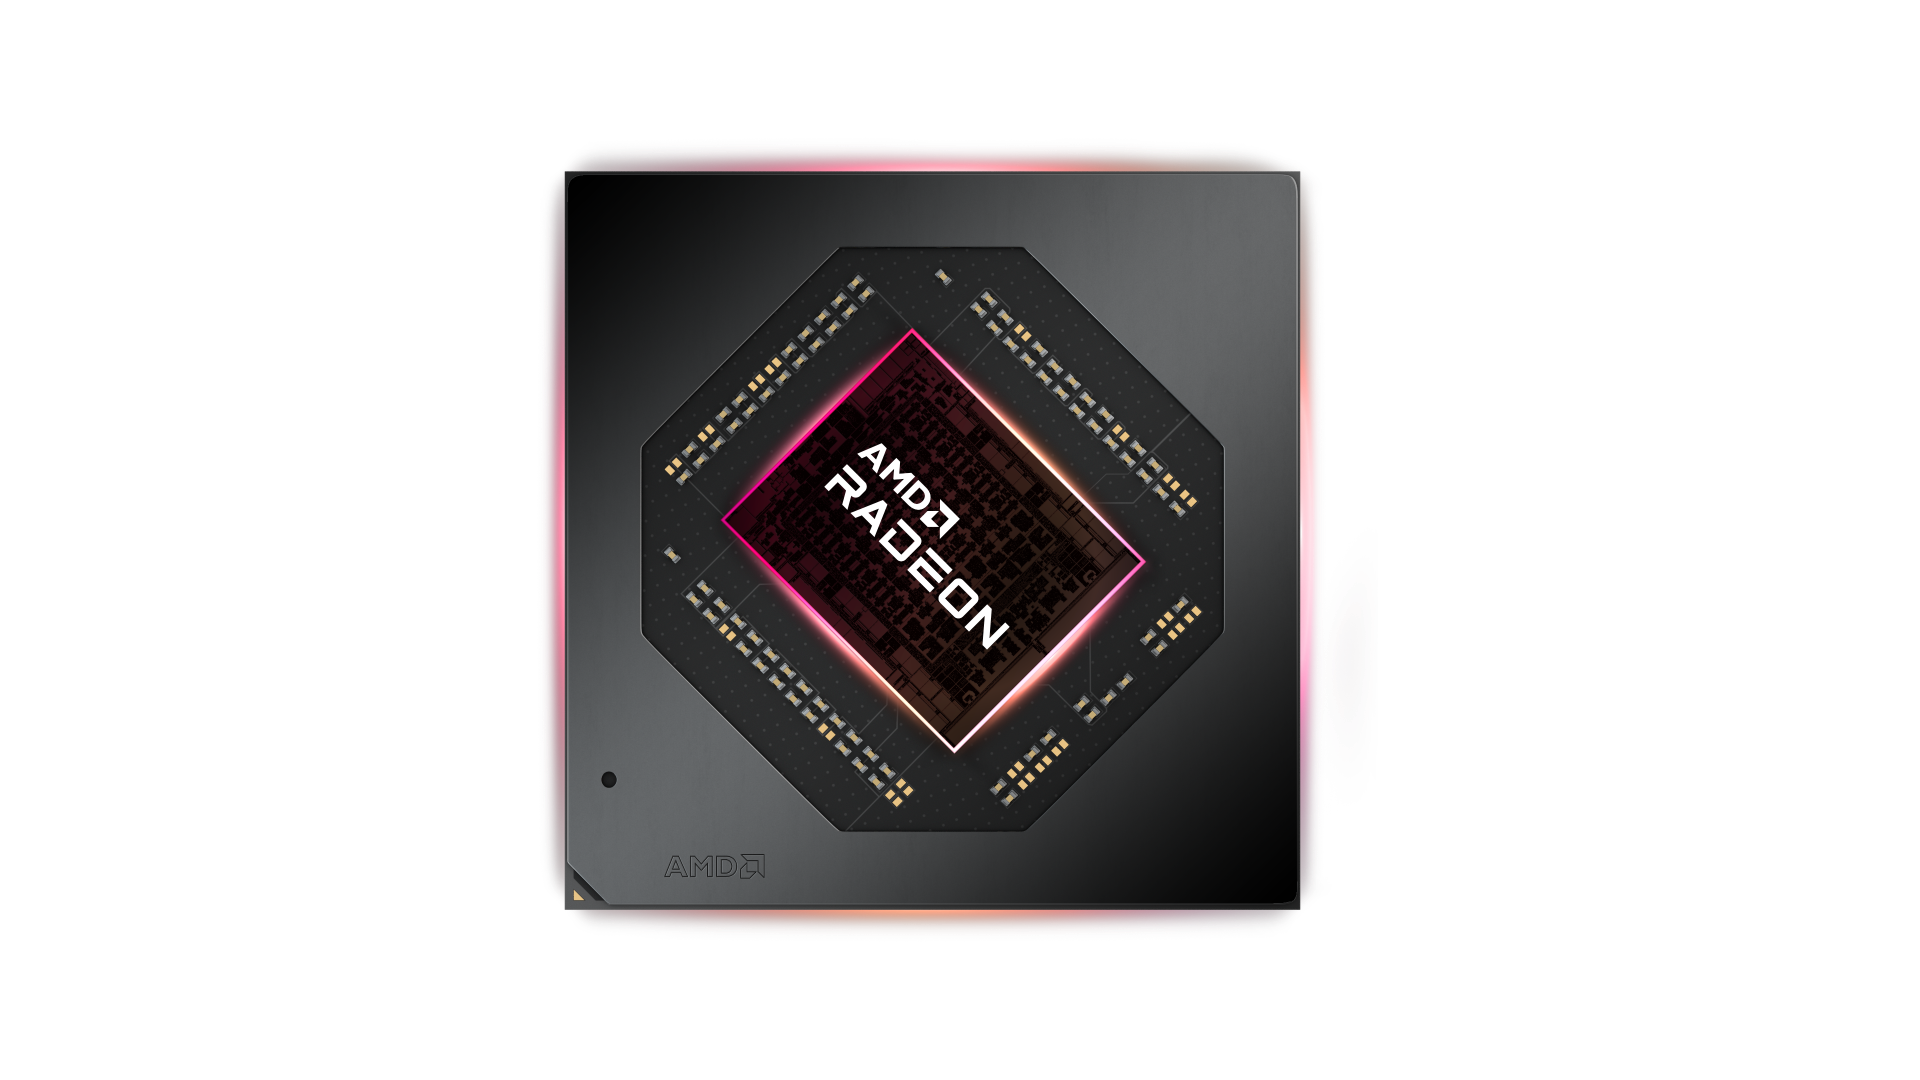 amd radeon rx 7000 series gpu for laptops AMD เปิดตัวกราฟิกการ์ดใหม่สำหรับแล็ปท็อป ขับเคลื่อนการเล่นเกมประสิทธิภาพสูงและการใช้พลังงานอย่างมีประสิทธิภาพ